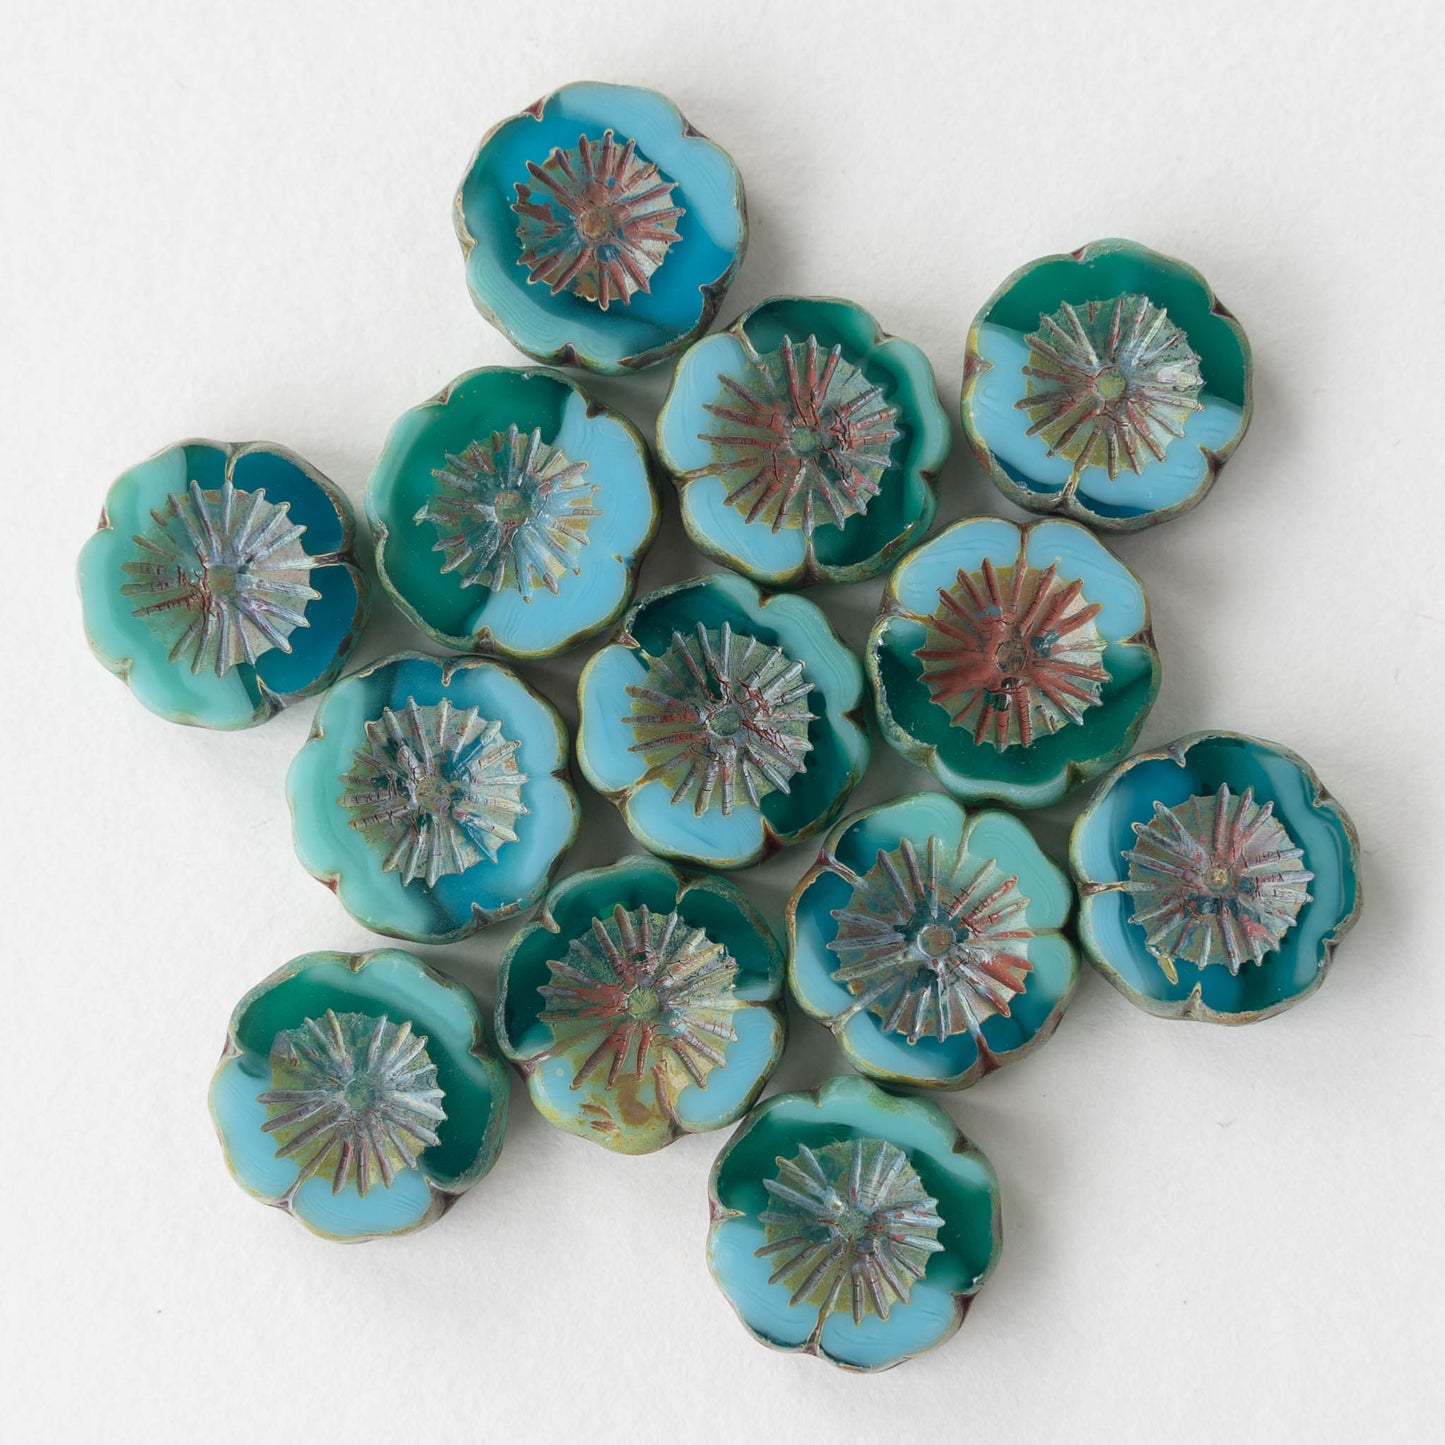 14mm Hibiscus Flower Beads - Transparent Aqua Teal Mix - 10 Beads